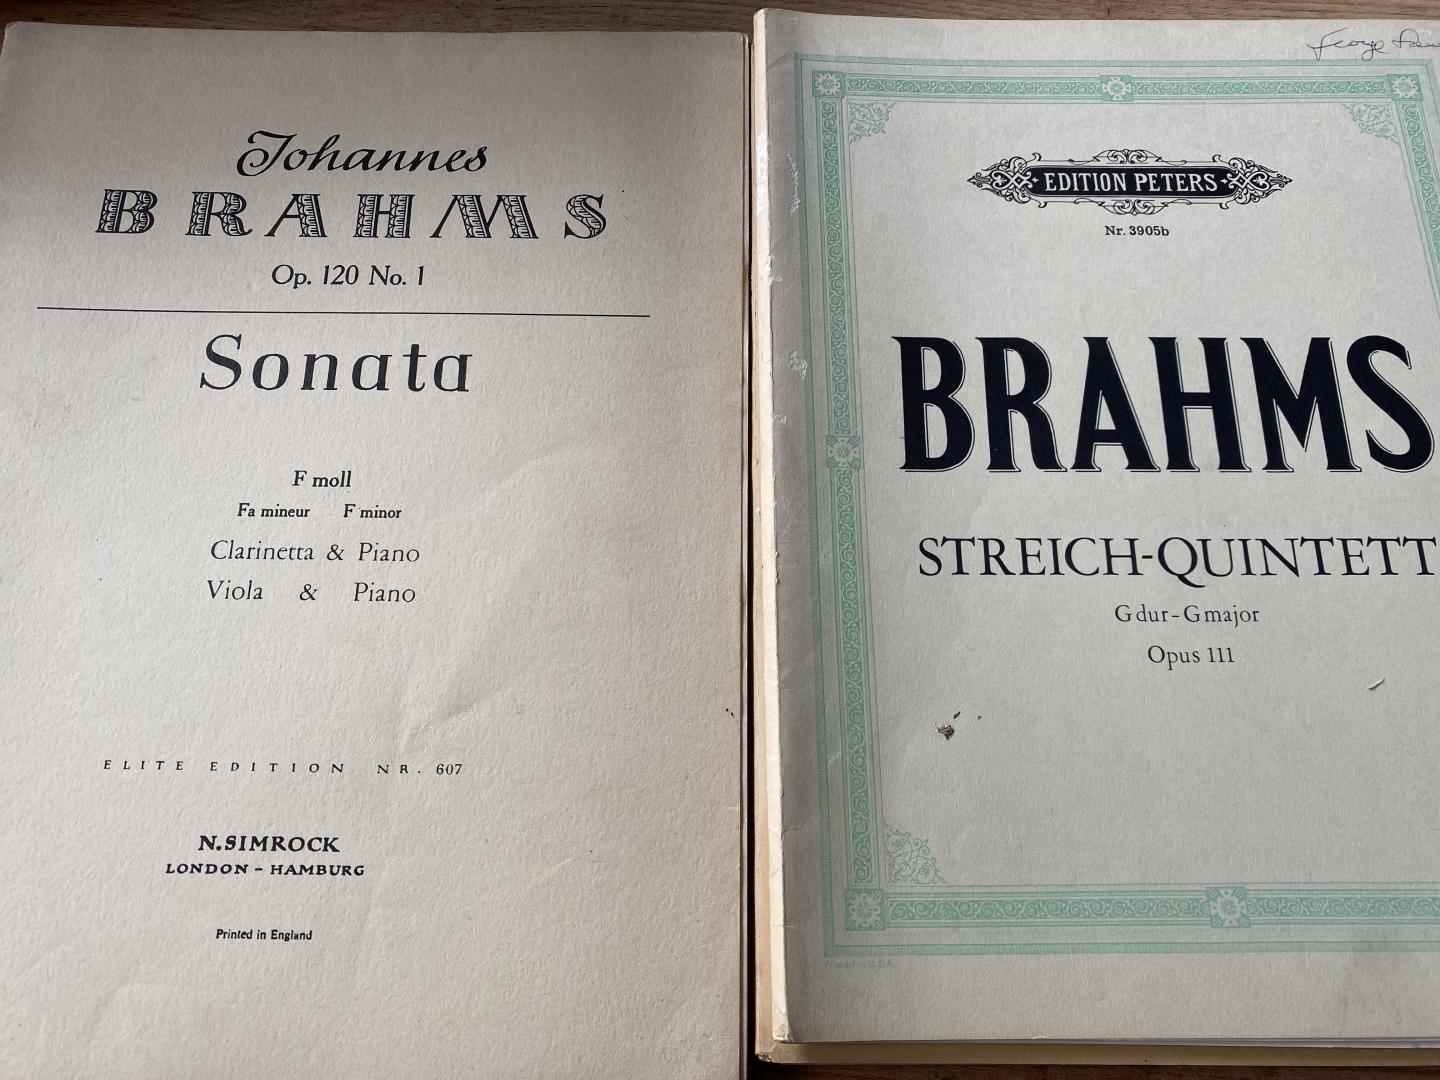 Johannes Brahms - 6 delen; Vol. 1624 Op 25 Piano Quartet in G minor, Vol 1626 Op. 60, piano Quartet in C. Minor, Vol 1625 Op. 26 in A minor, streich-quintett nr. 3905b Op 111, Op 120 nr 1 sonata F. Moll, Op. 51 & 67